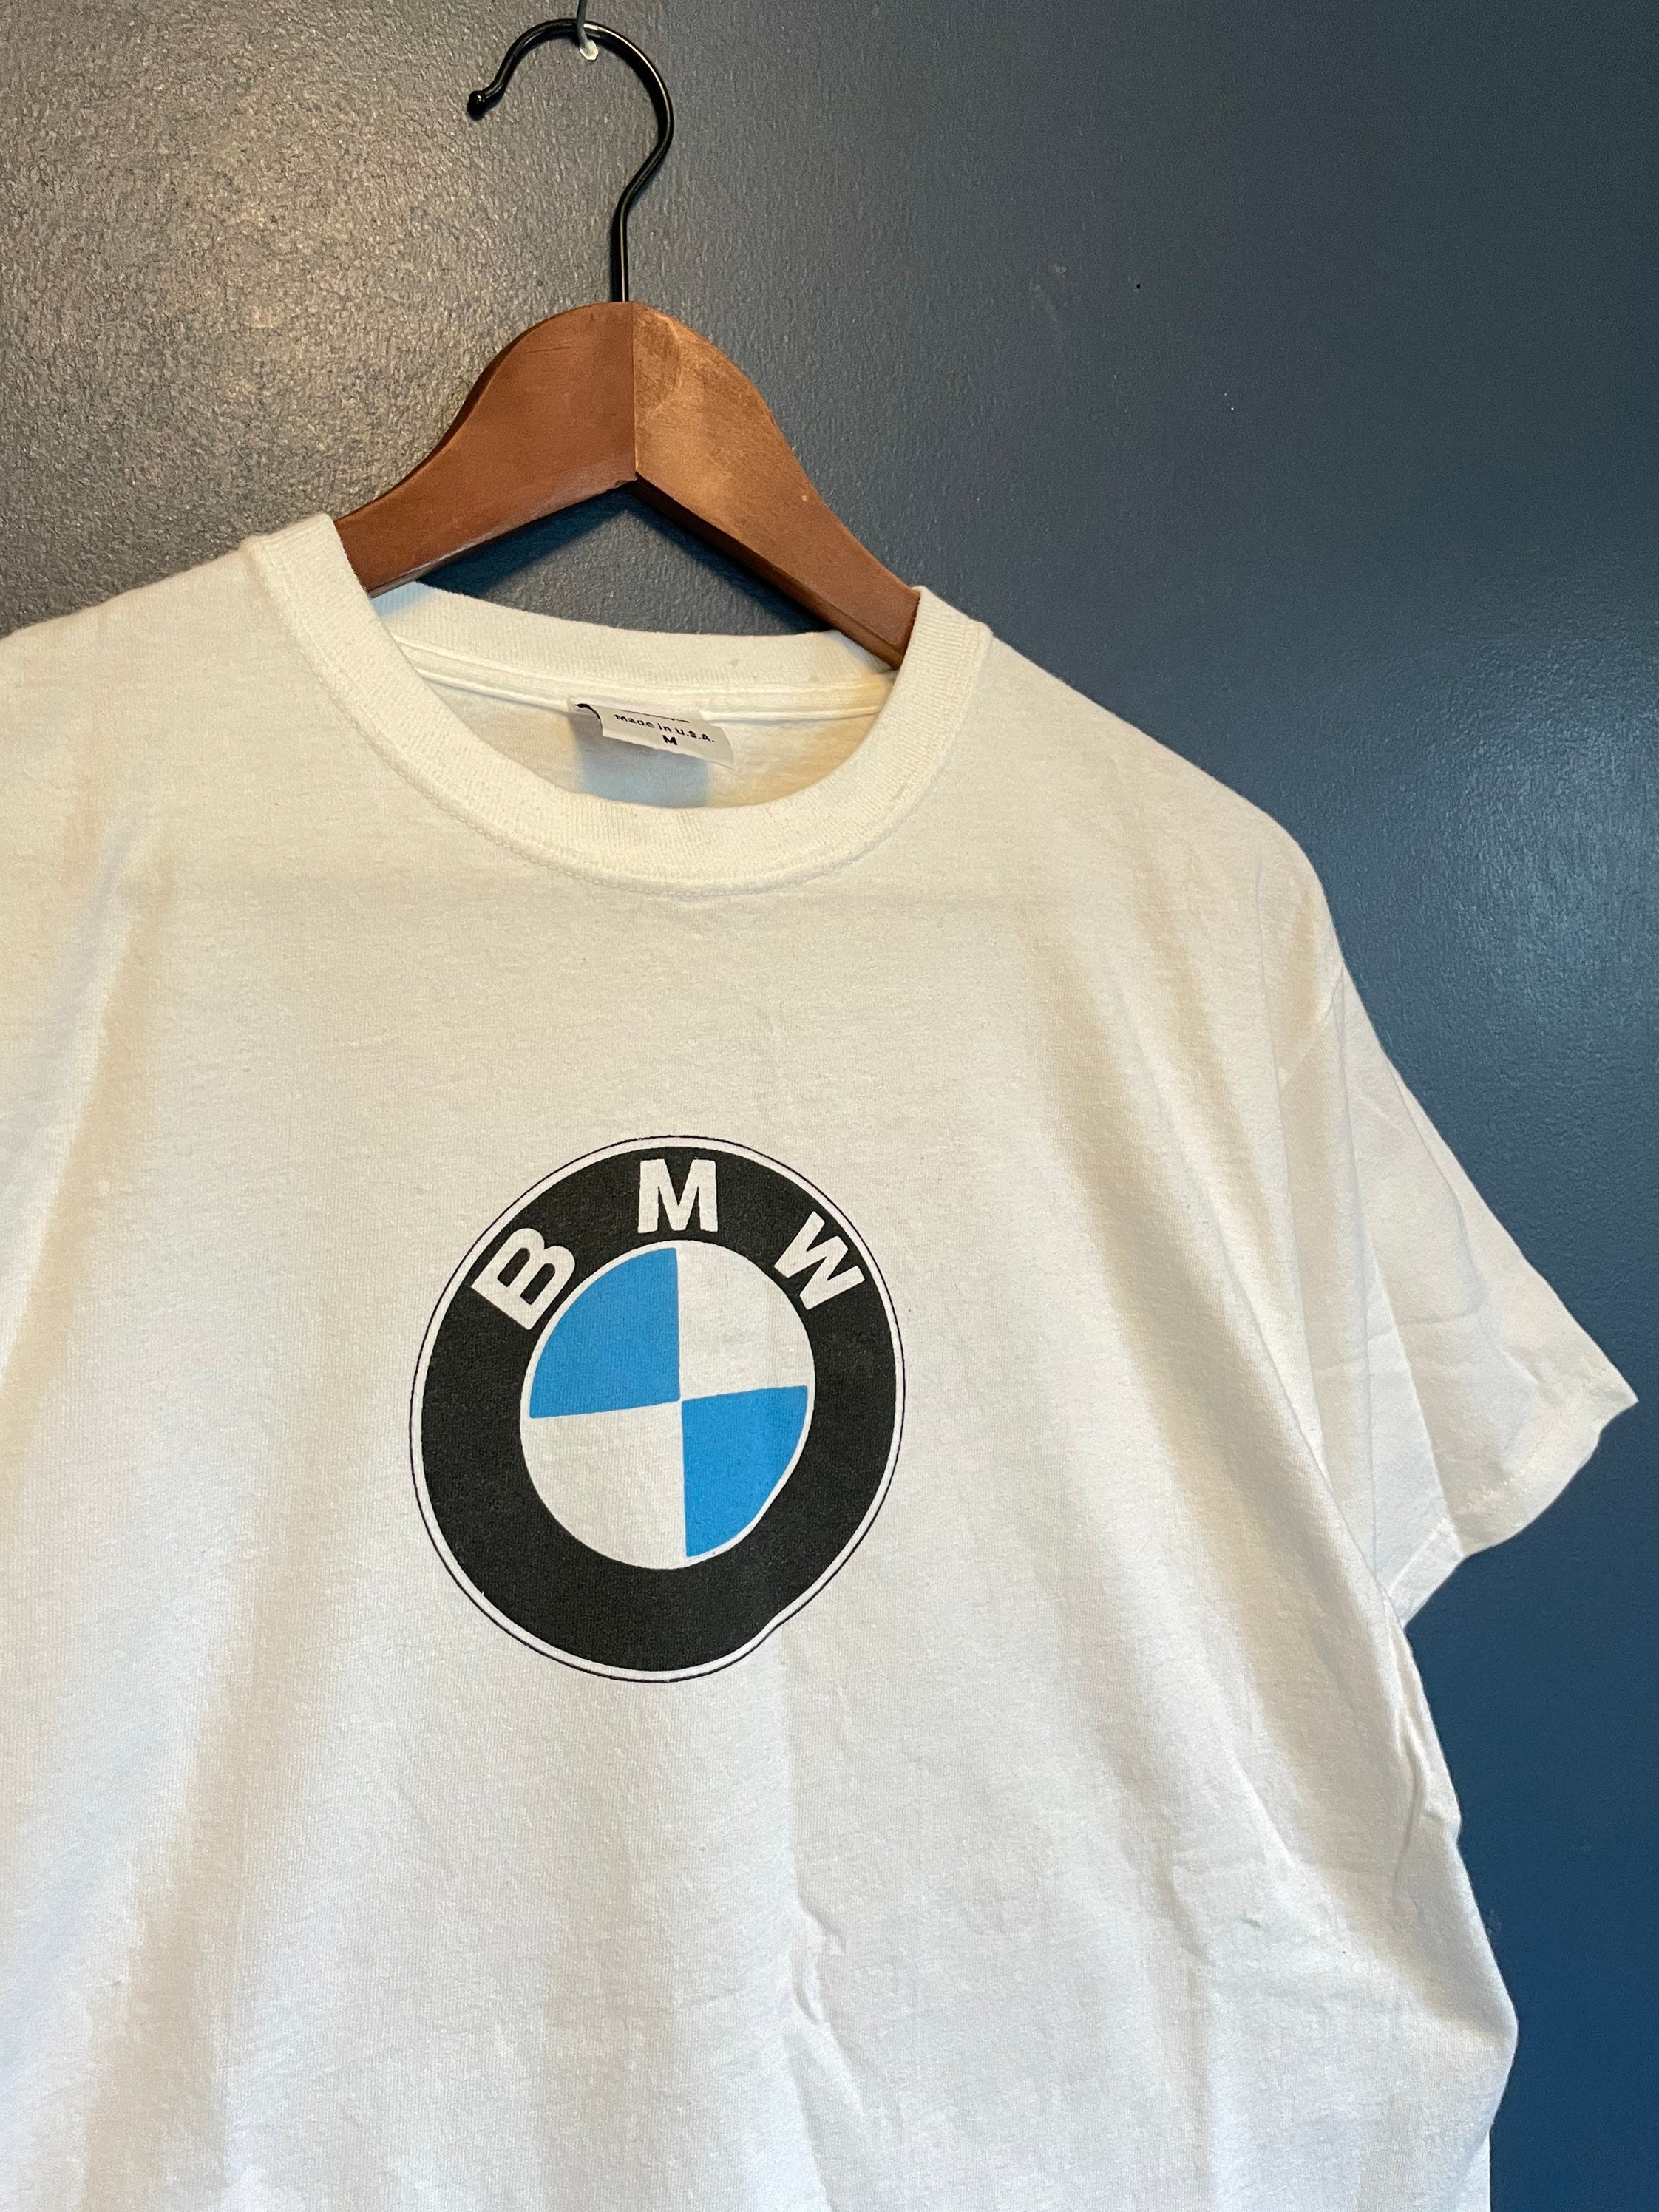 Tee-shirt vintage Homme BMW Auto Collection - Objetdecom